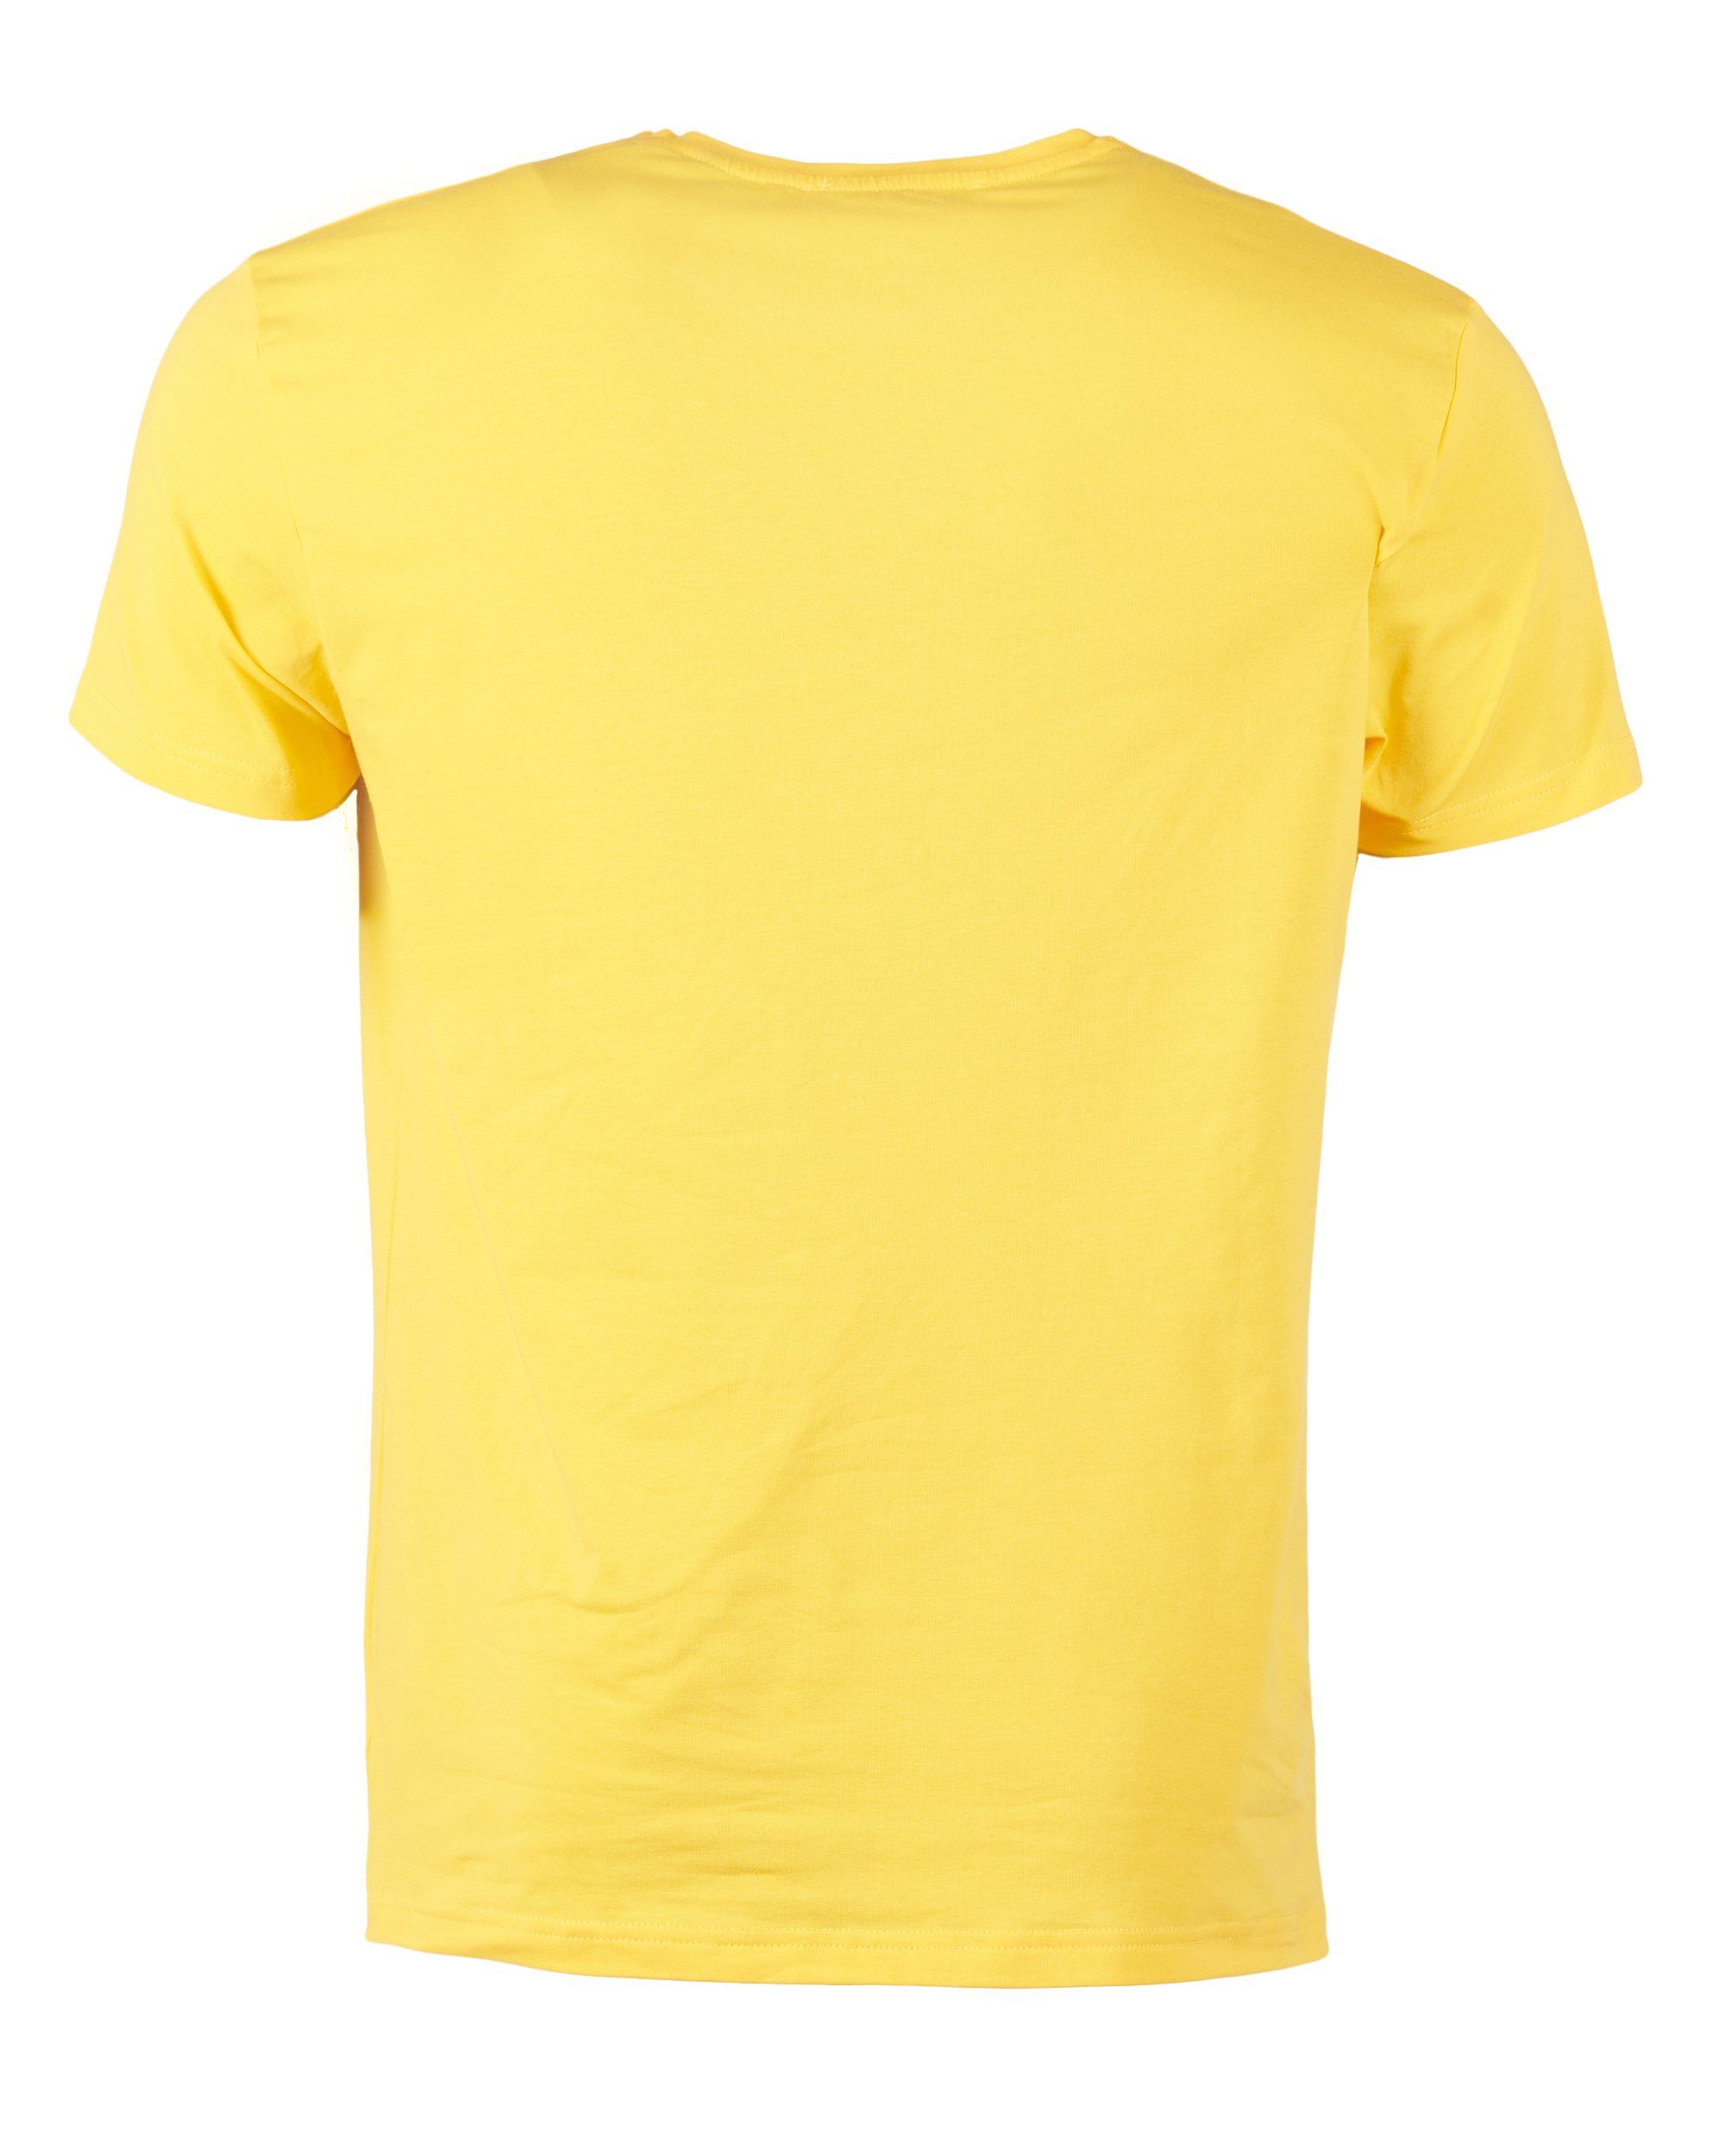 T-Shirt GUN TG20193018 Bling yellow TOP